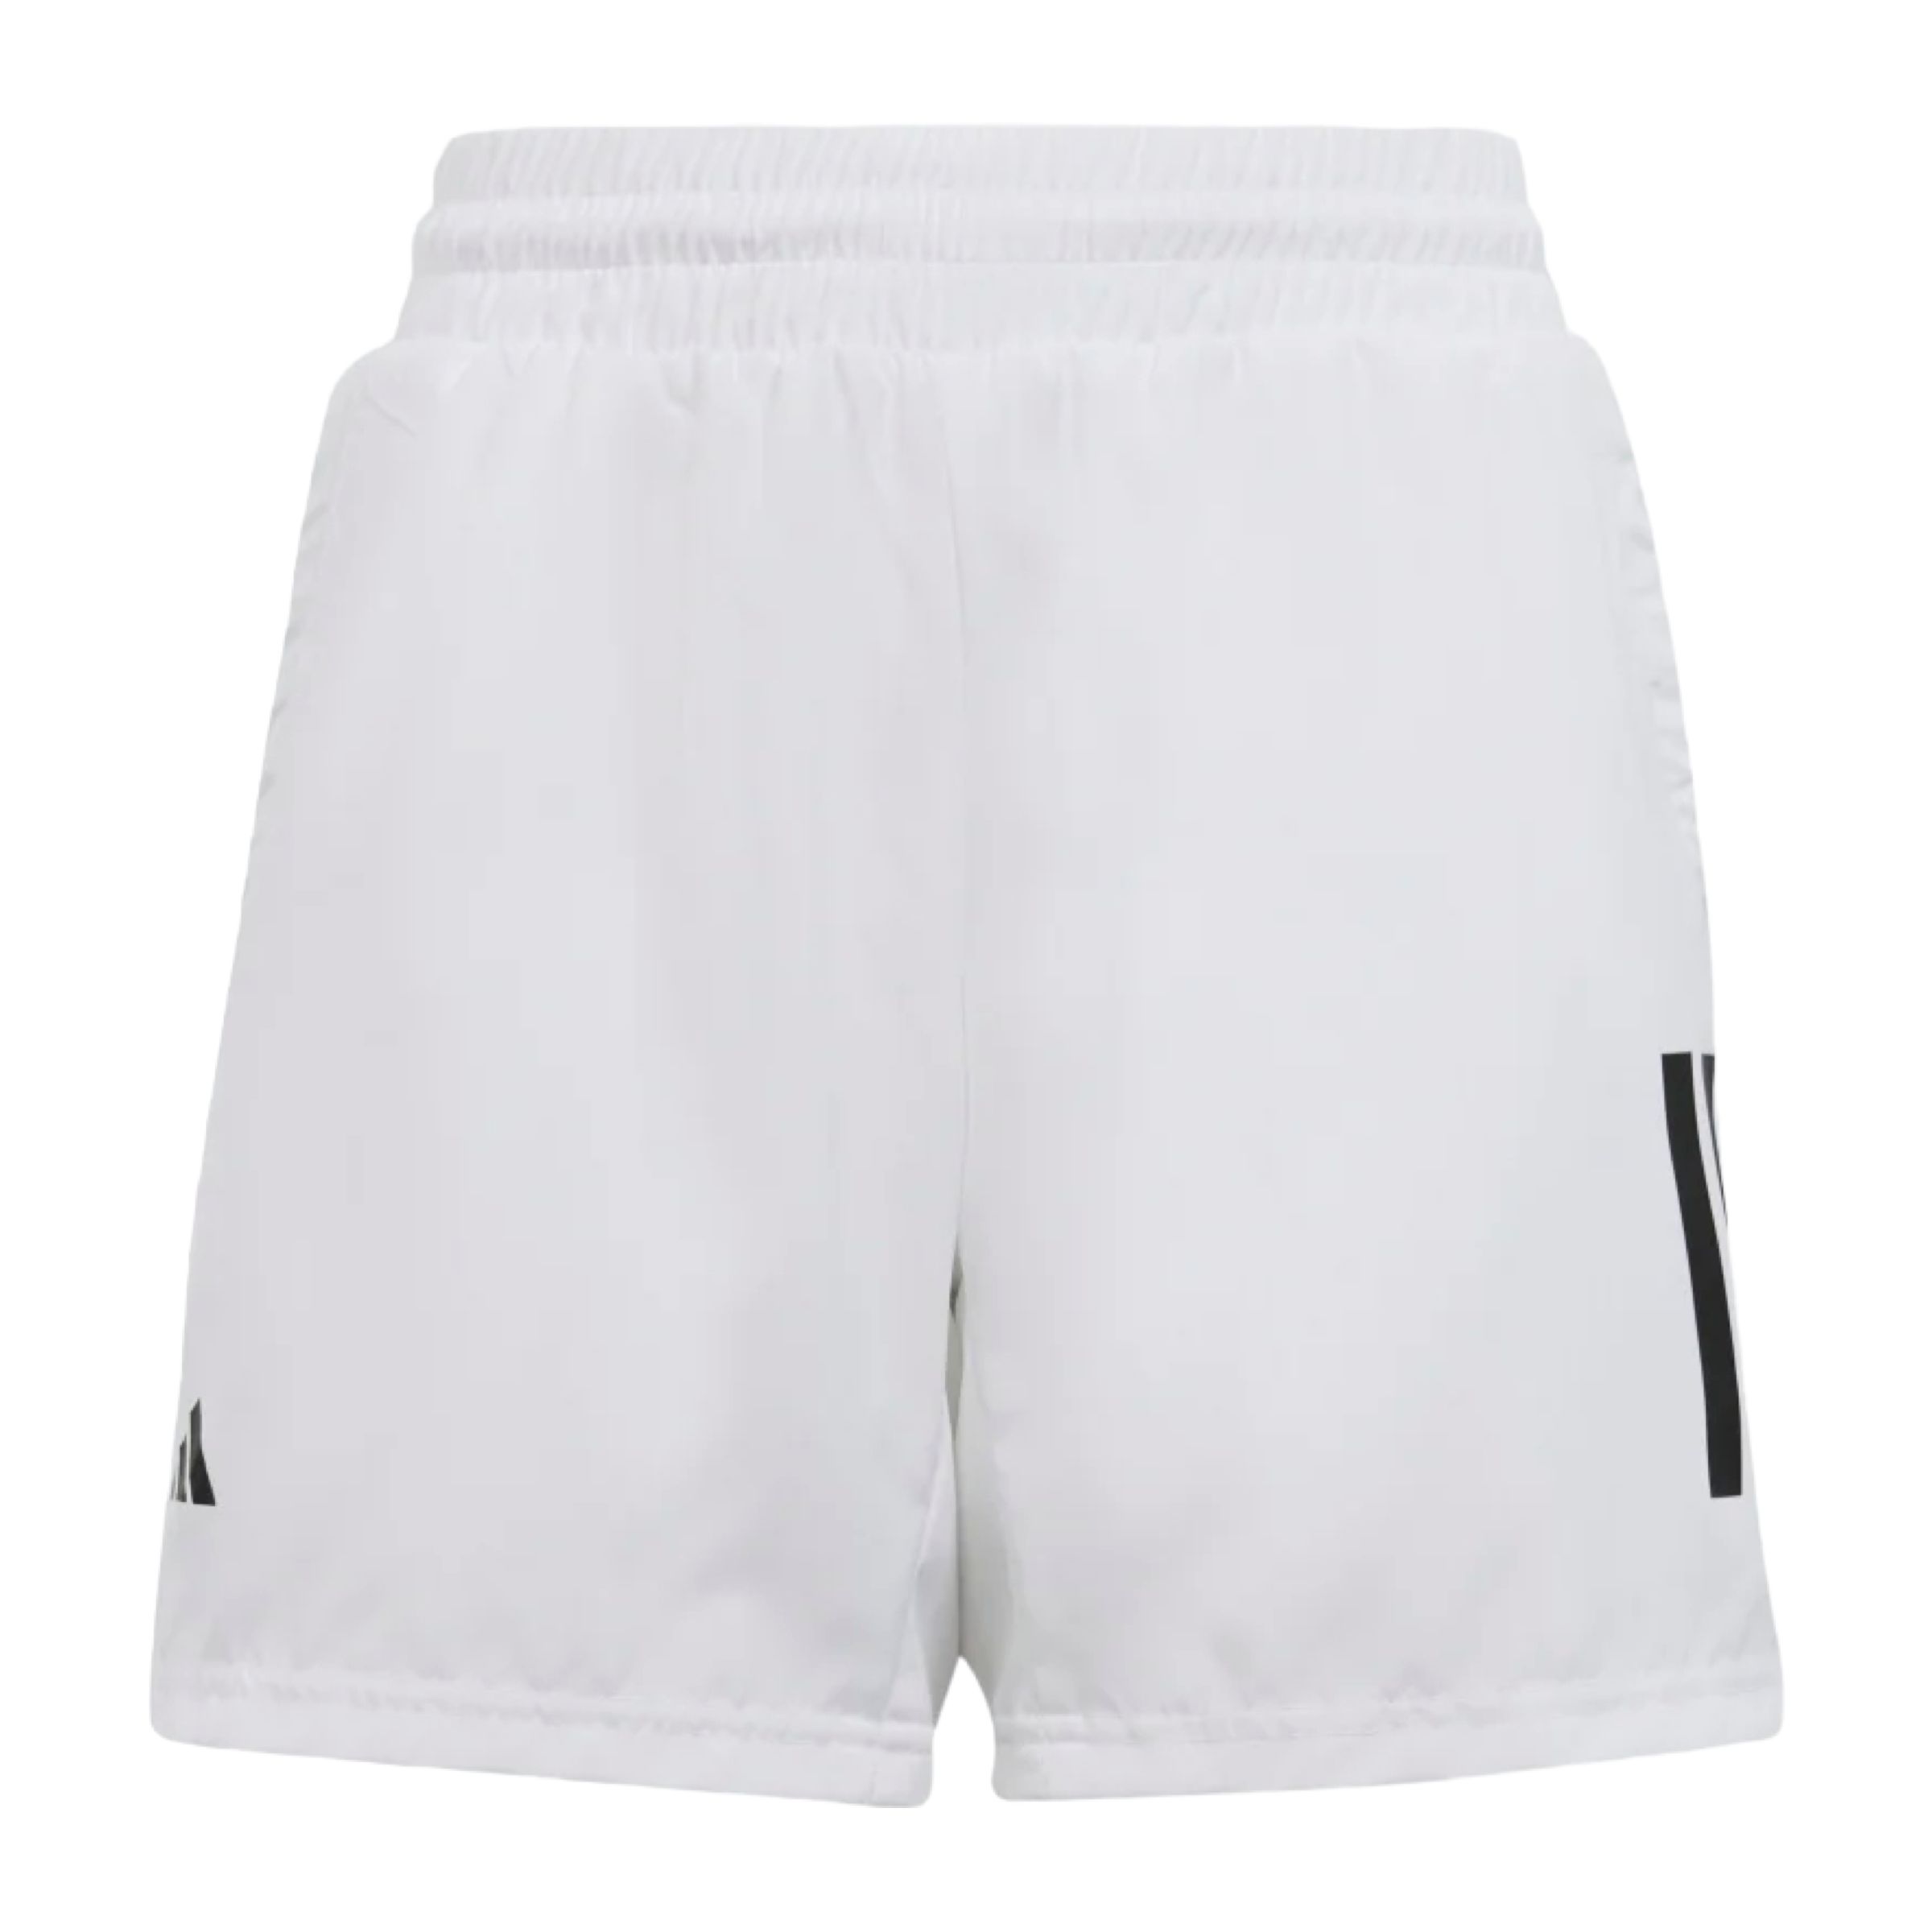 Adidas Pantaloncini Club 3 Stripes Bambino White